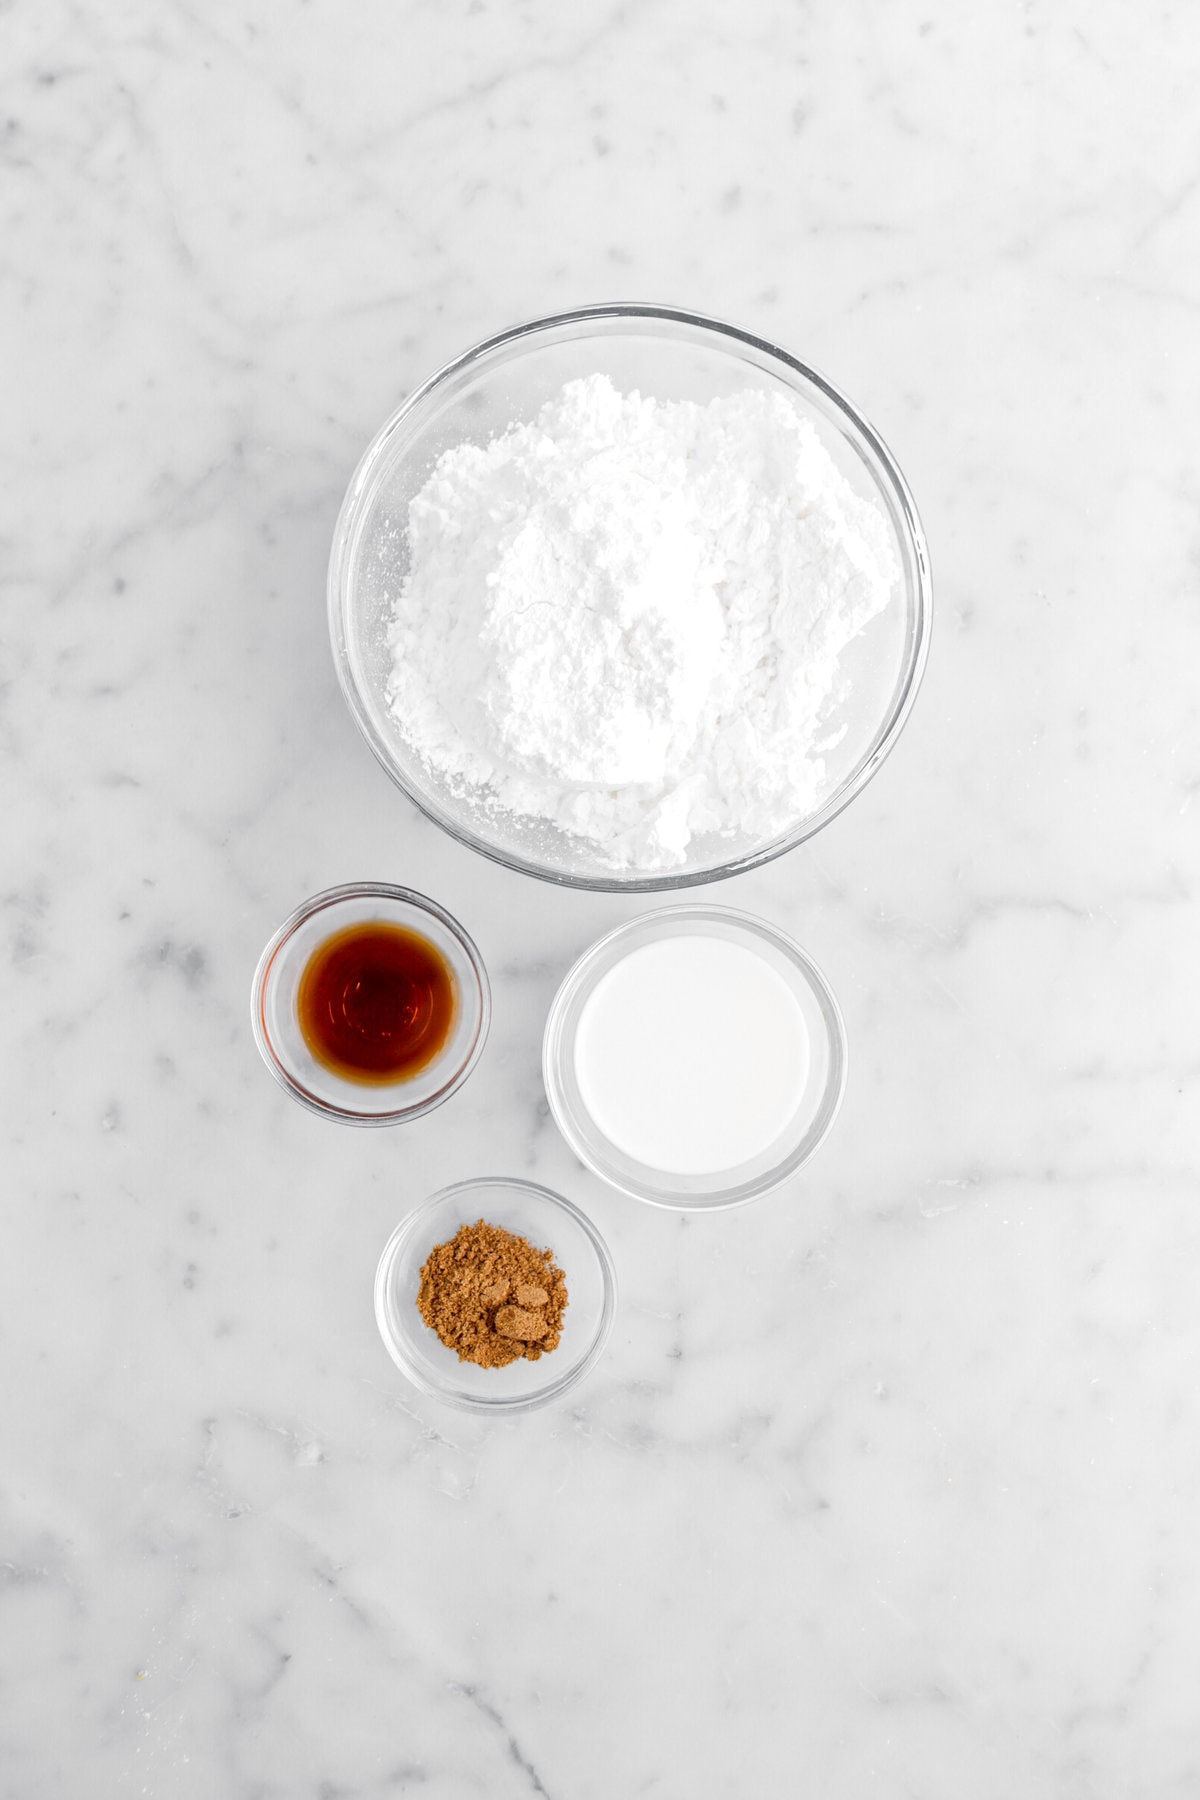 powdered sugar, vanilla, milk, and sipce on marble surface.